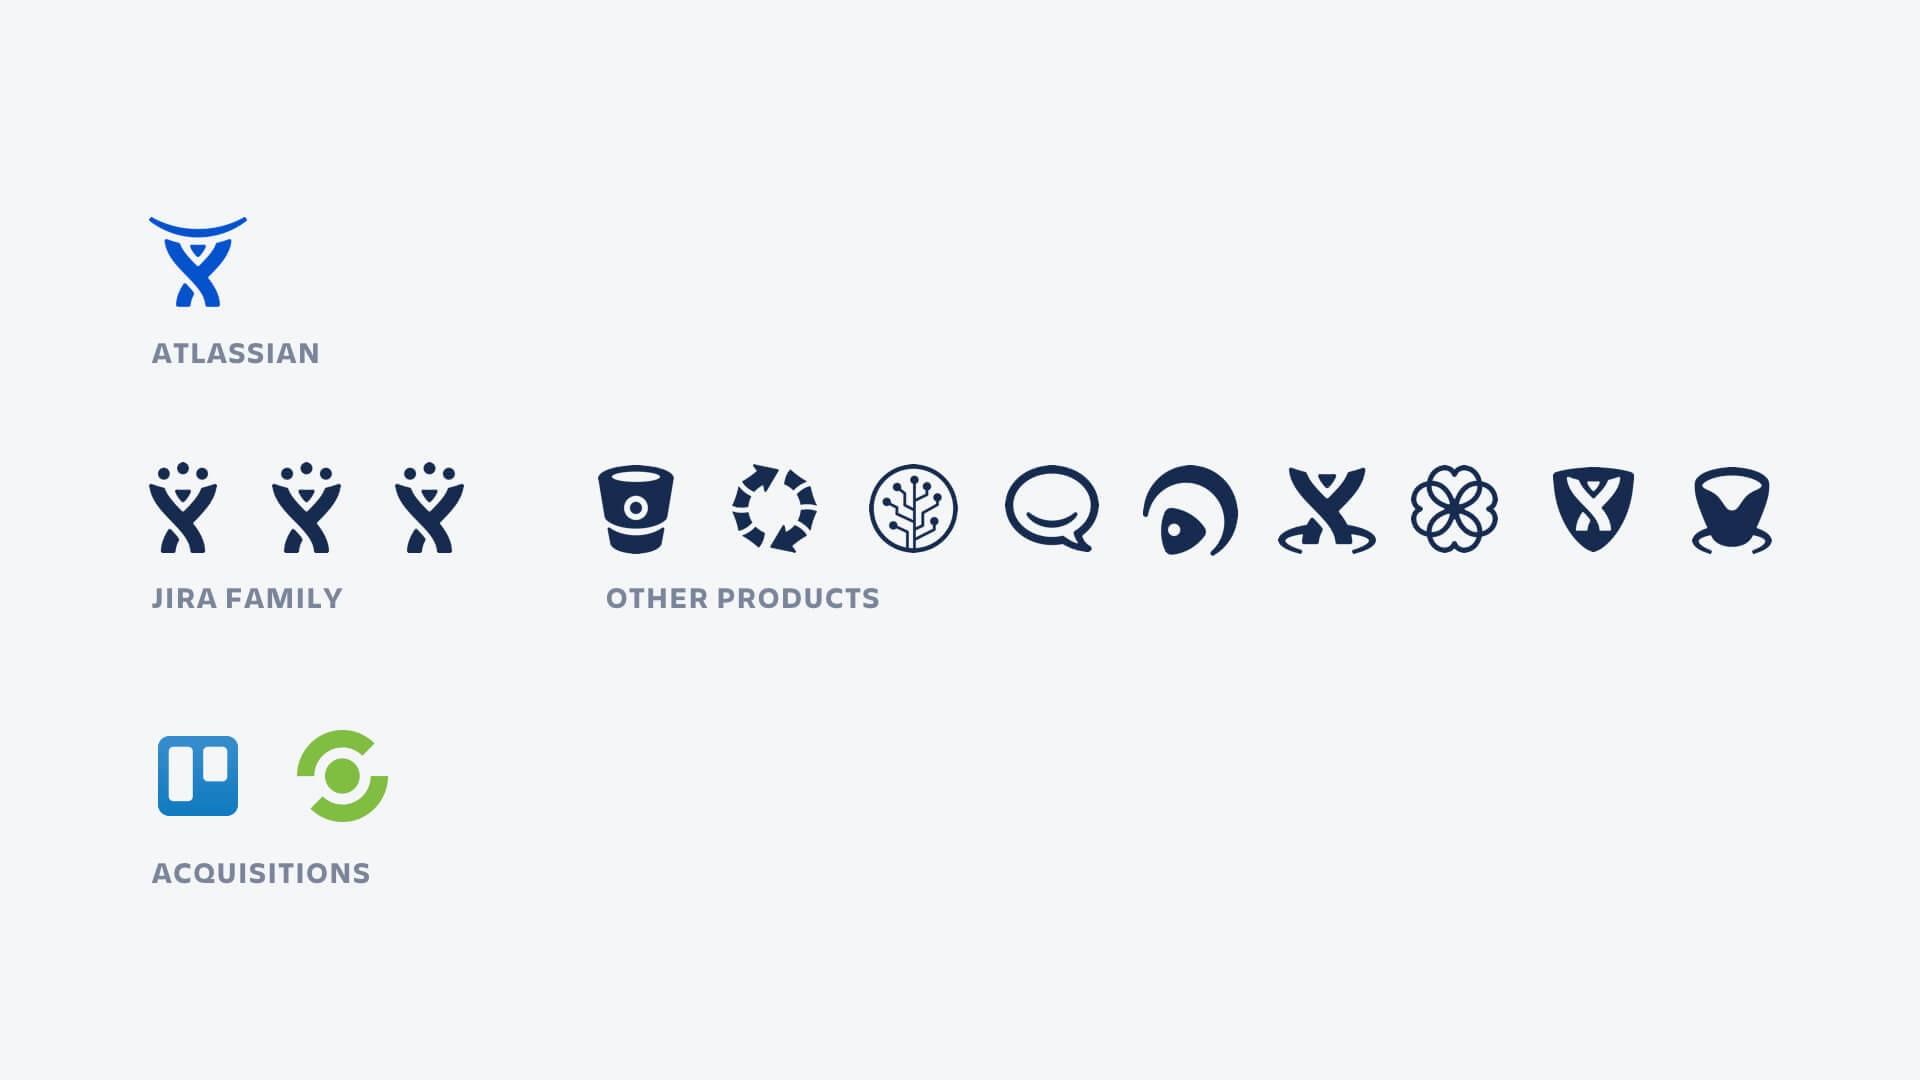 Few Logo - Behind the Scenes of Our Bold New Brand - Designing Atlassian - Medium